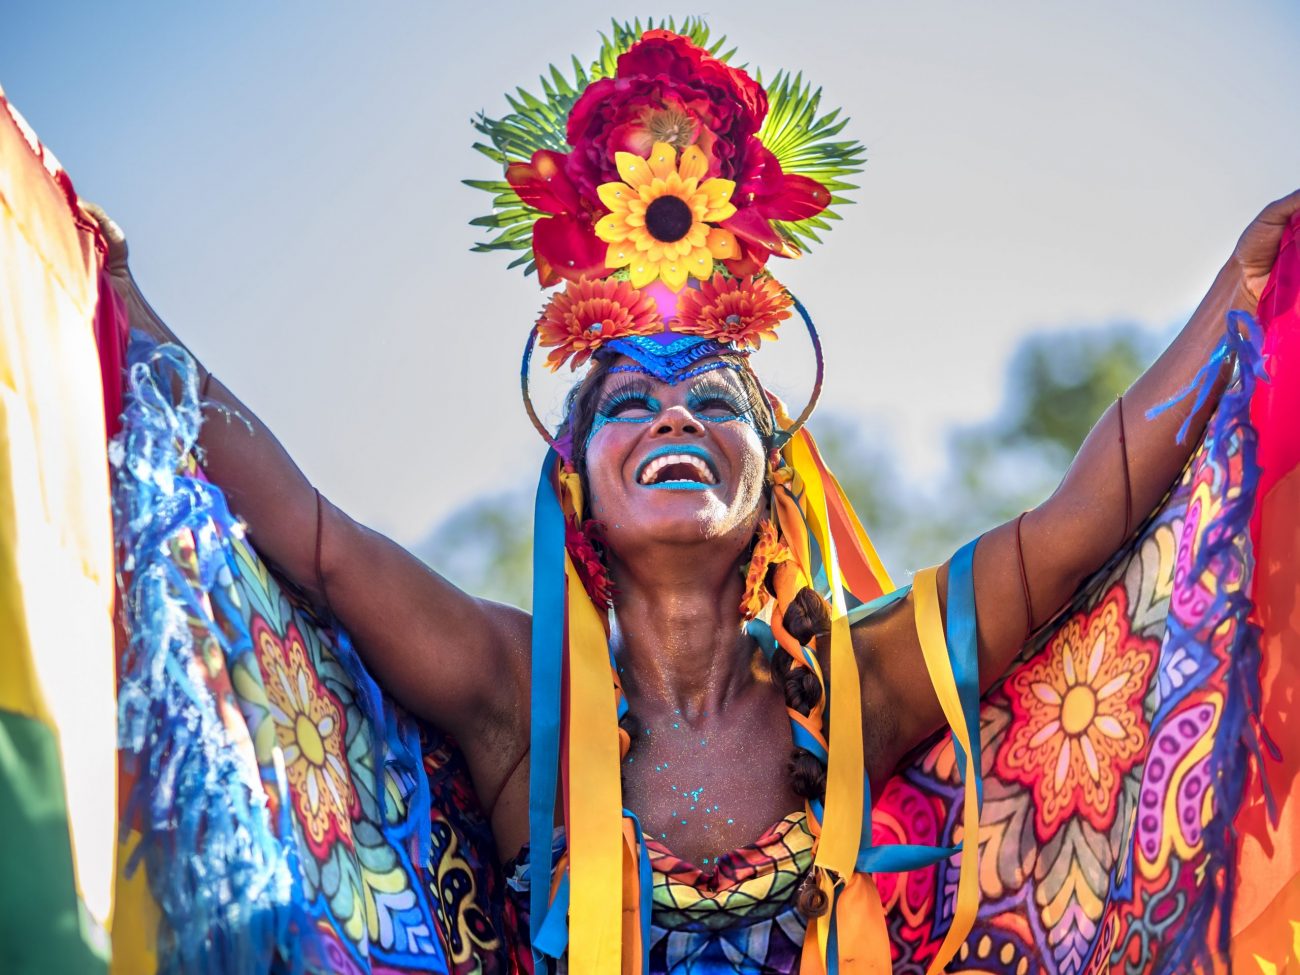 Brazilian Woman Wearing Colorful Costume for Rio Carnival, Brazil